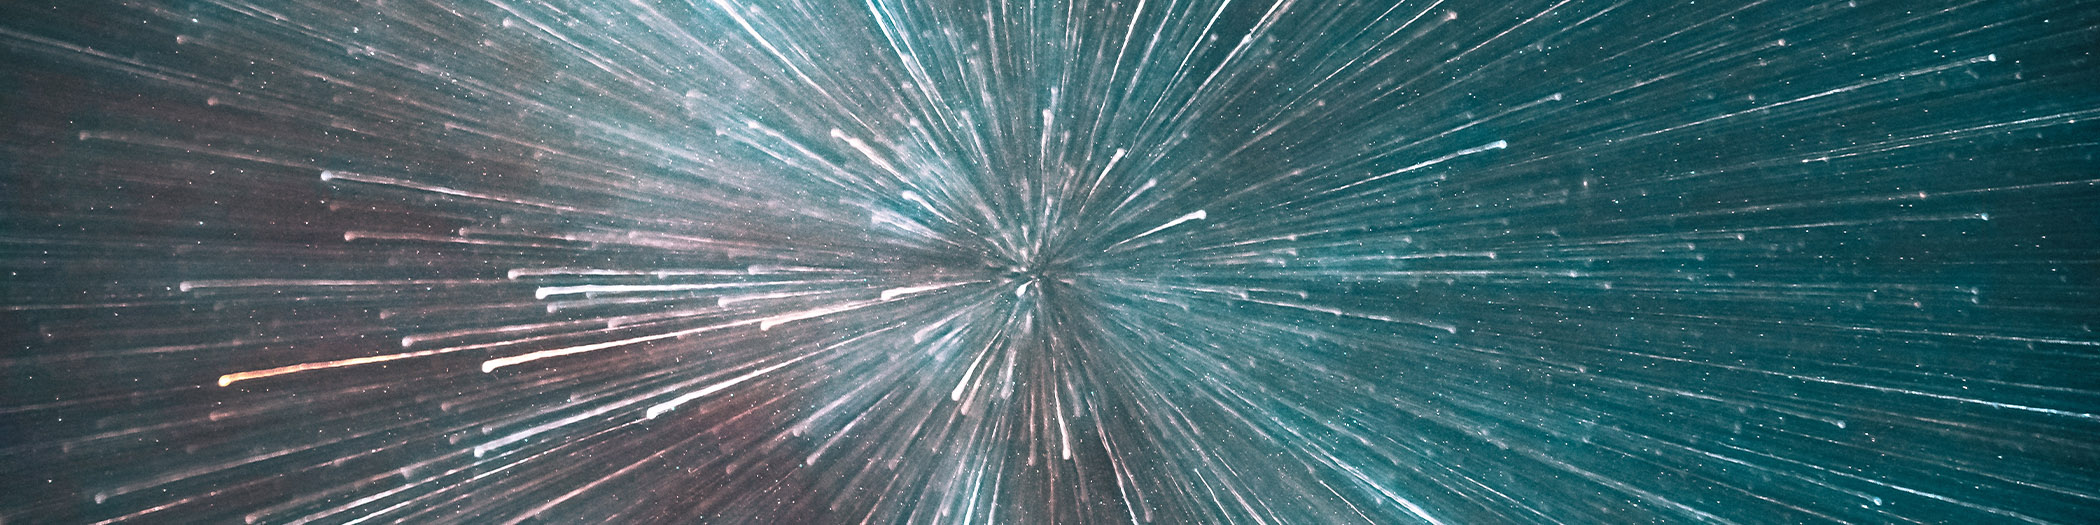 Abstract starburst image